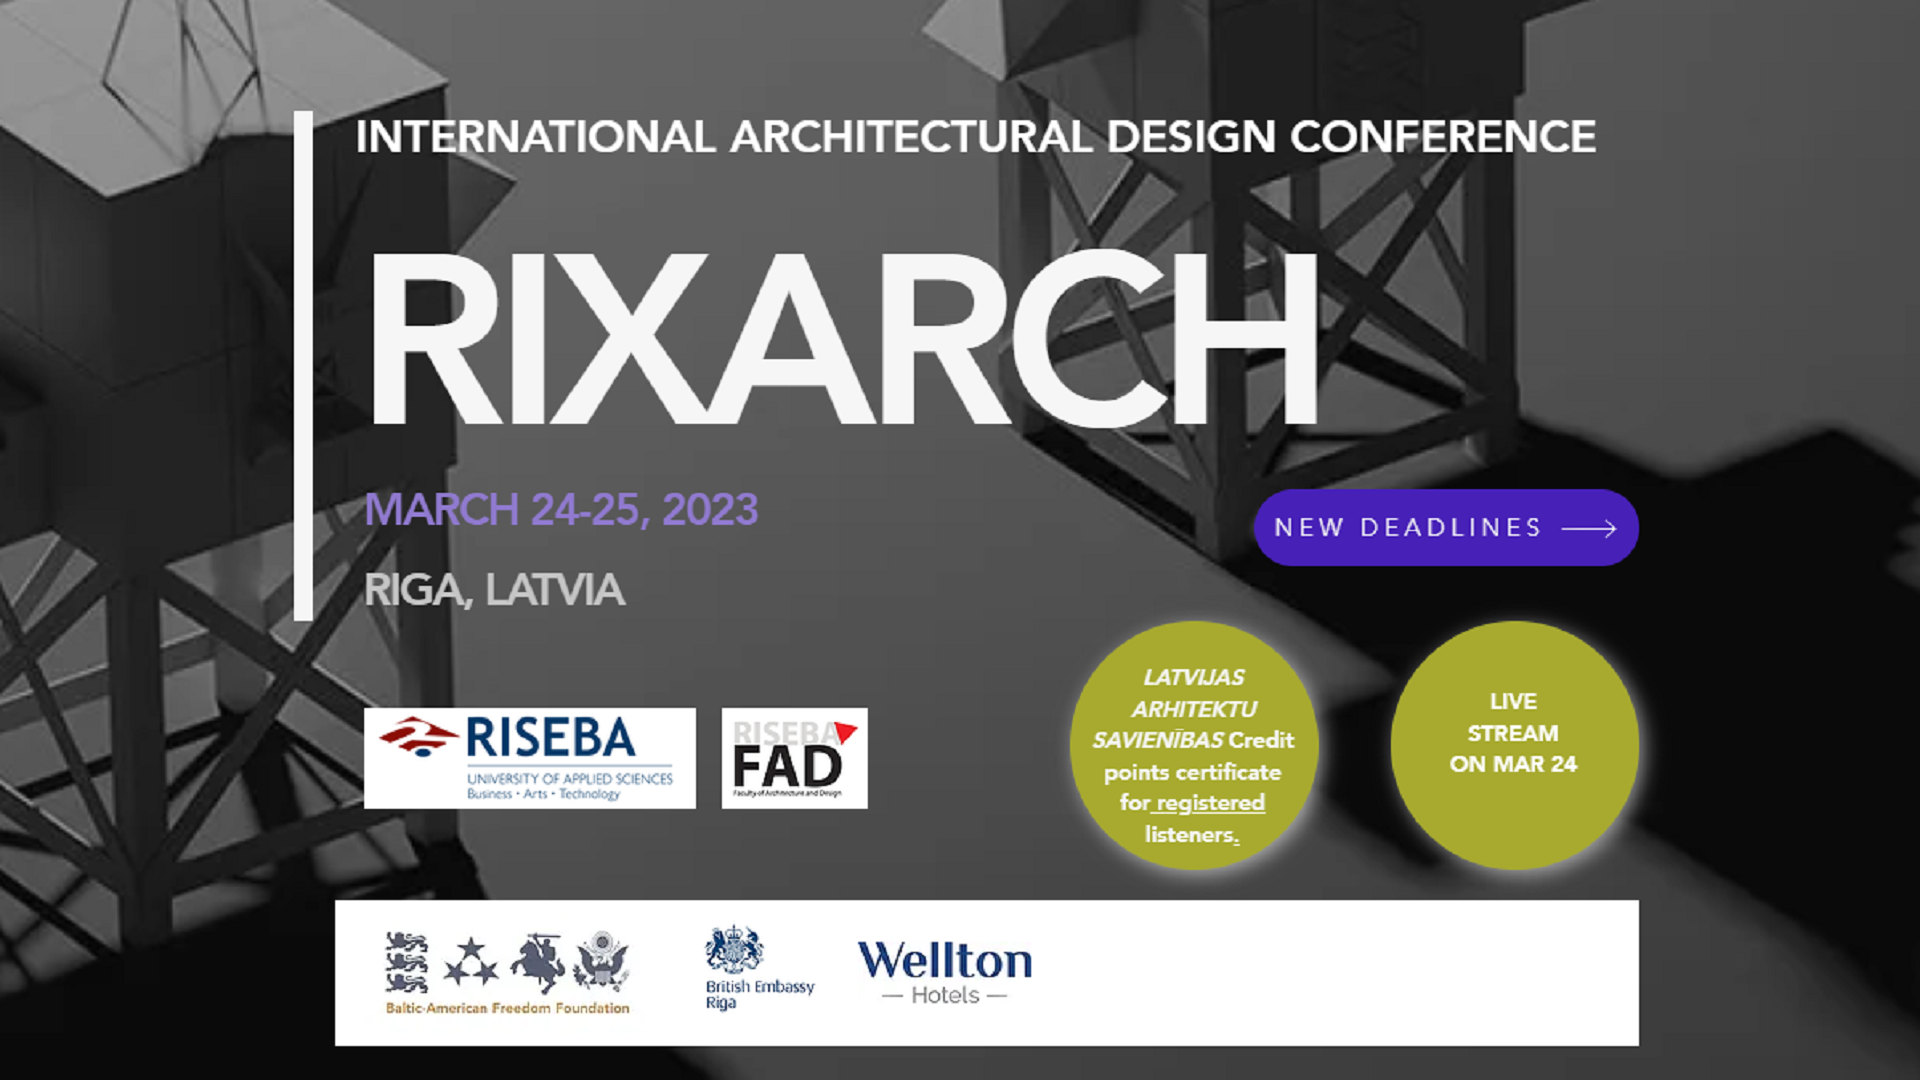 RISEBA Arhitektūras un dizaina fakultāte aicina uz 1. Starptautisko Arhitektūras dizaina konferenci RIXARCH 2023